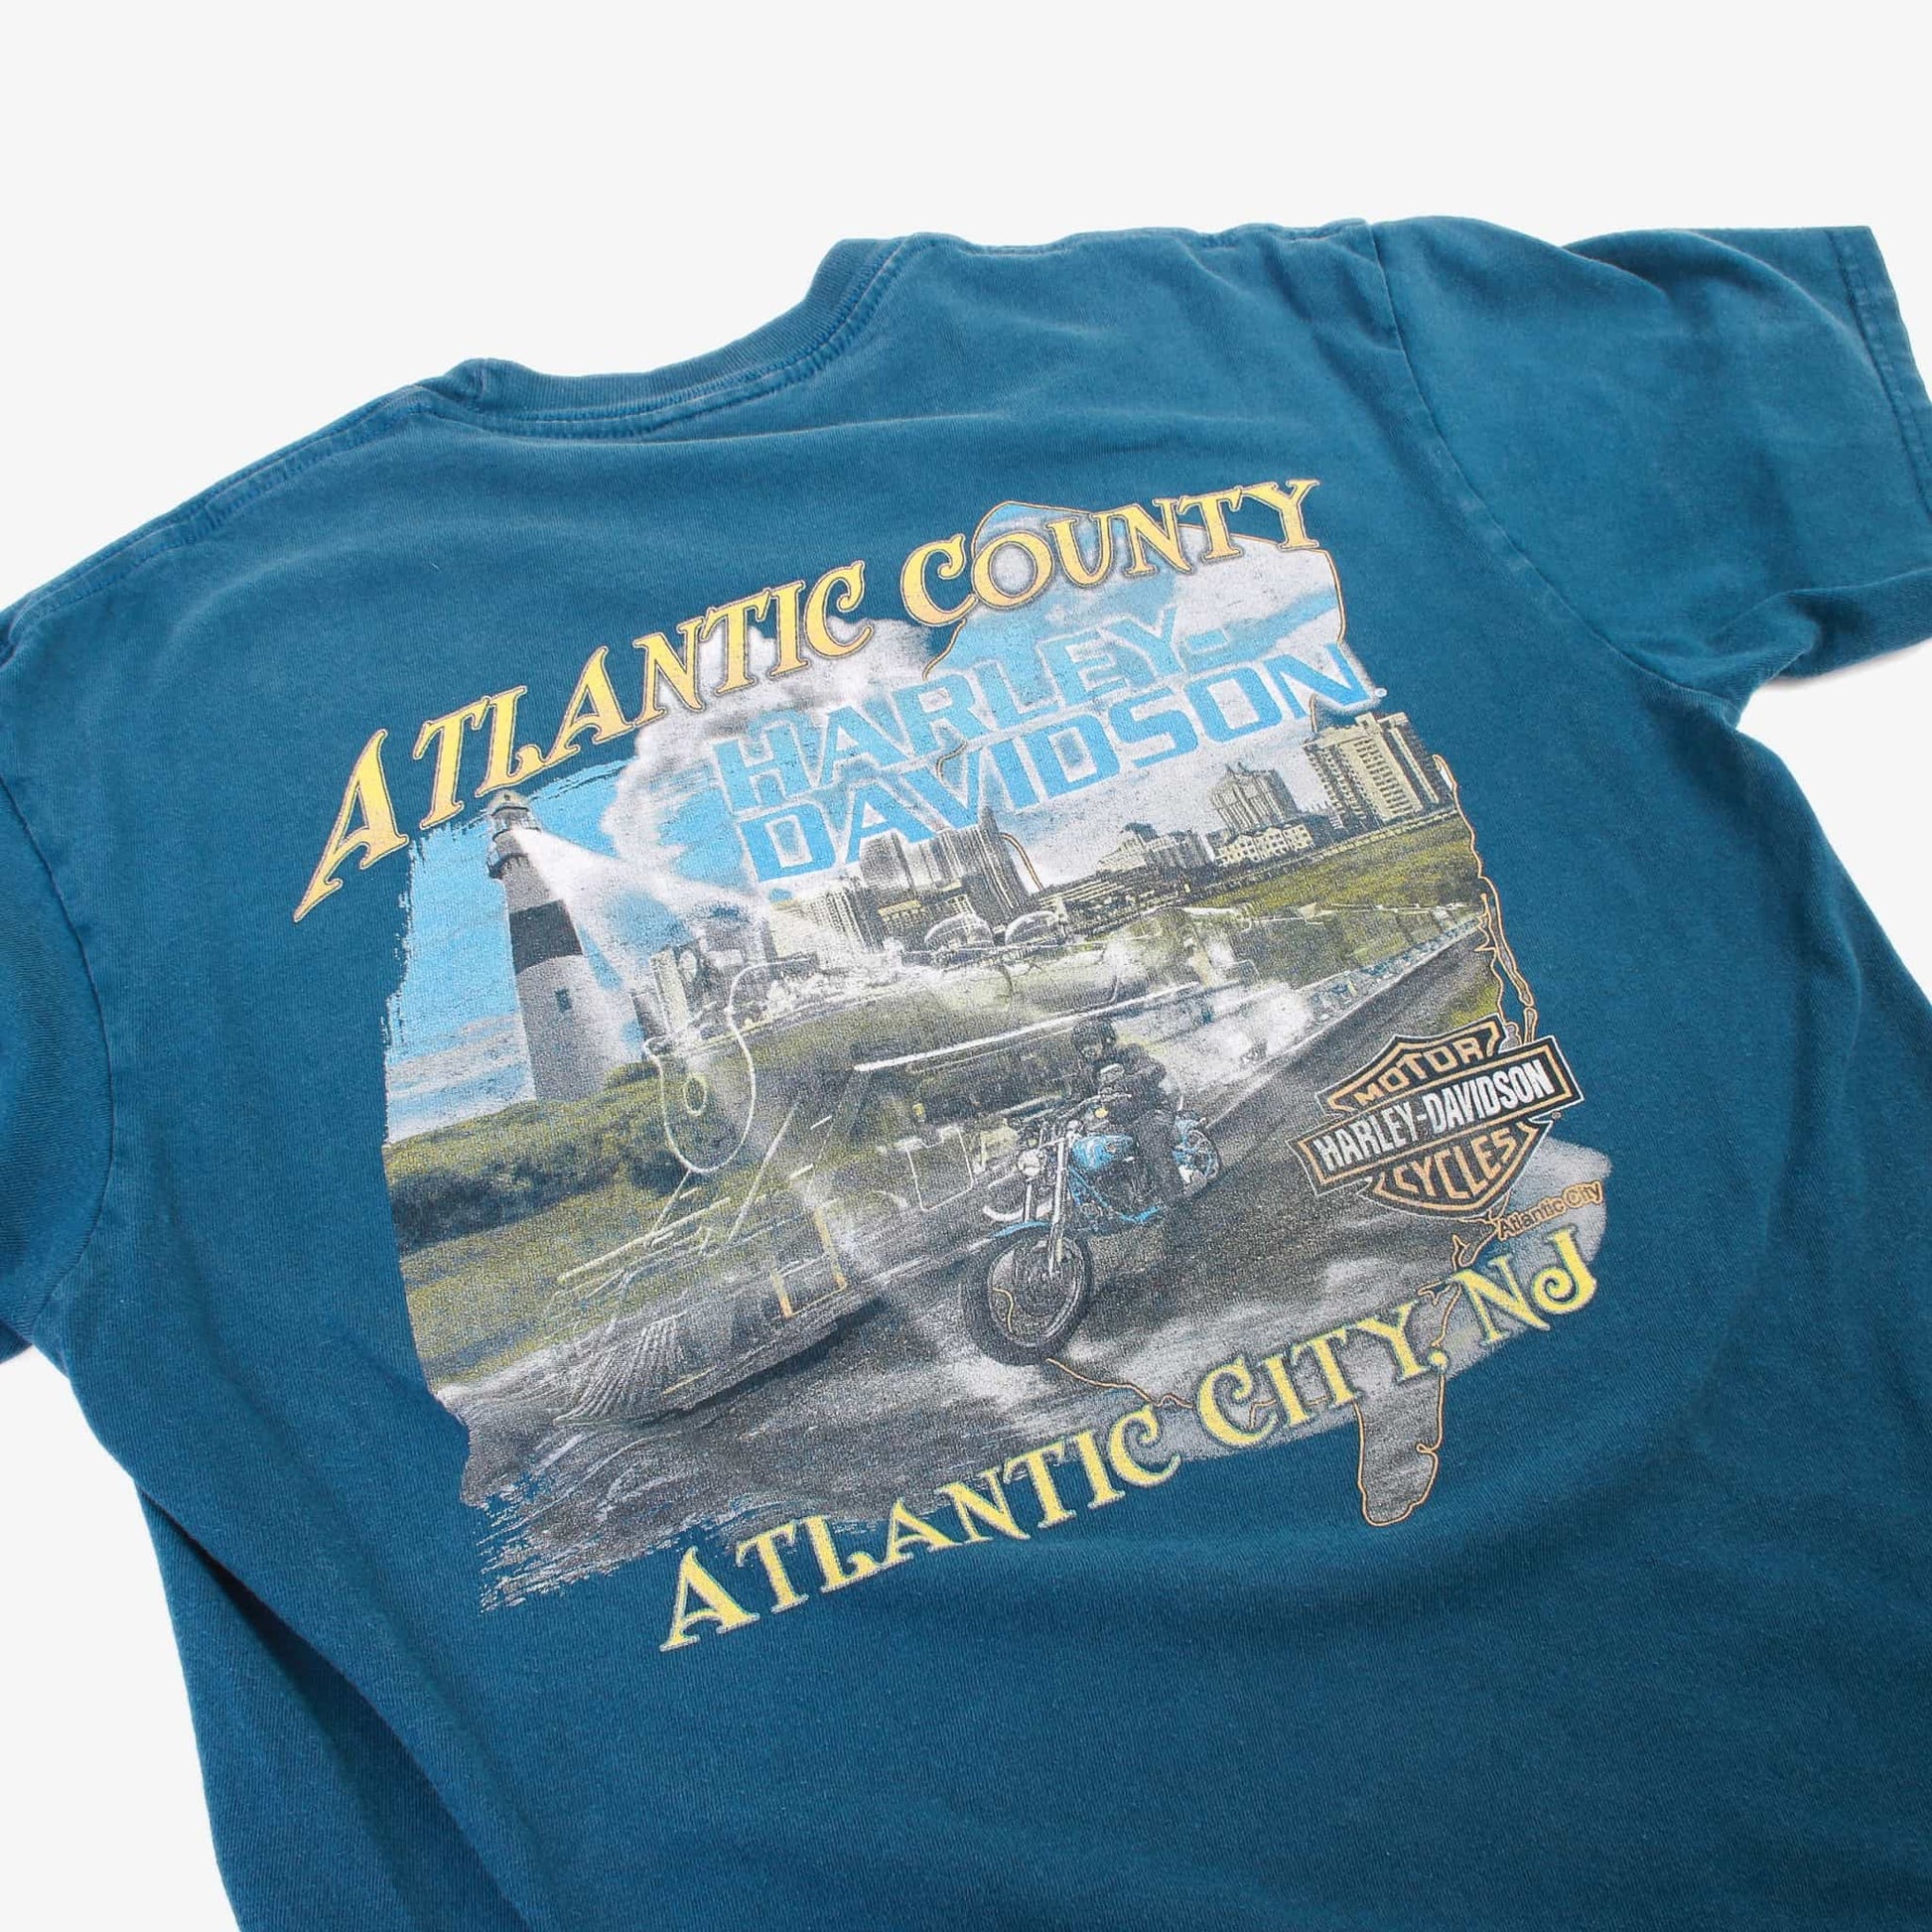 Harley Davidson 'Atlantic County' T-Shirt - American Madness